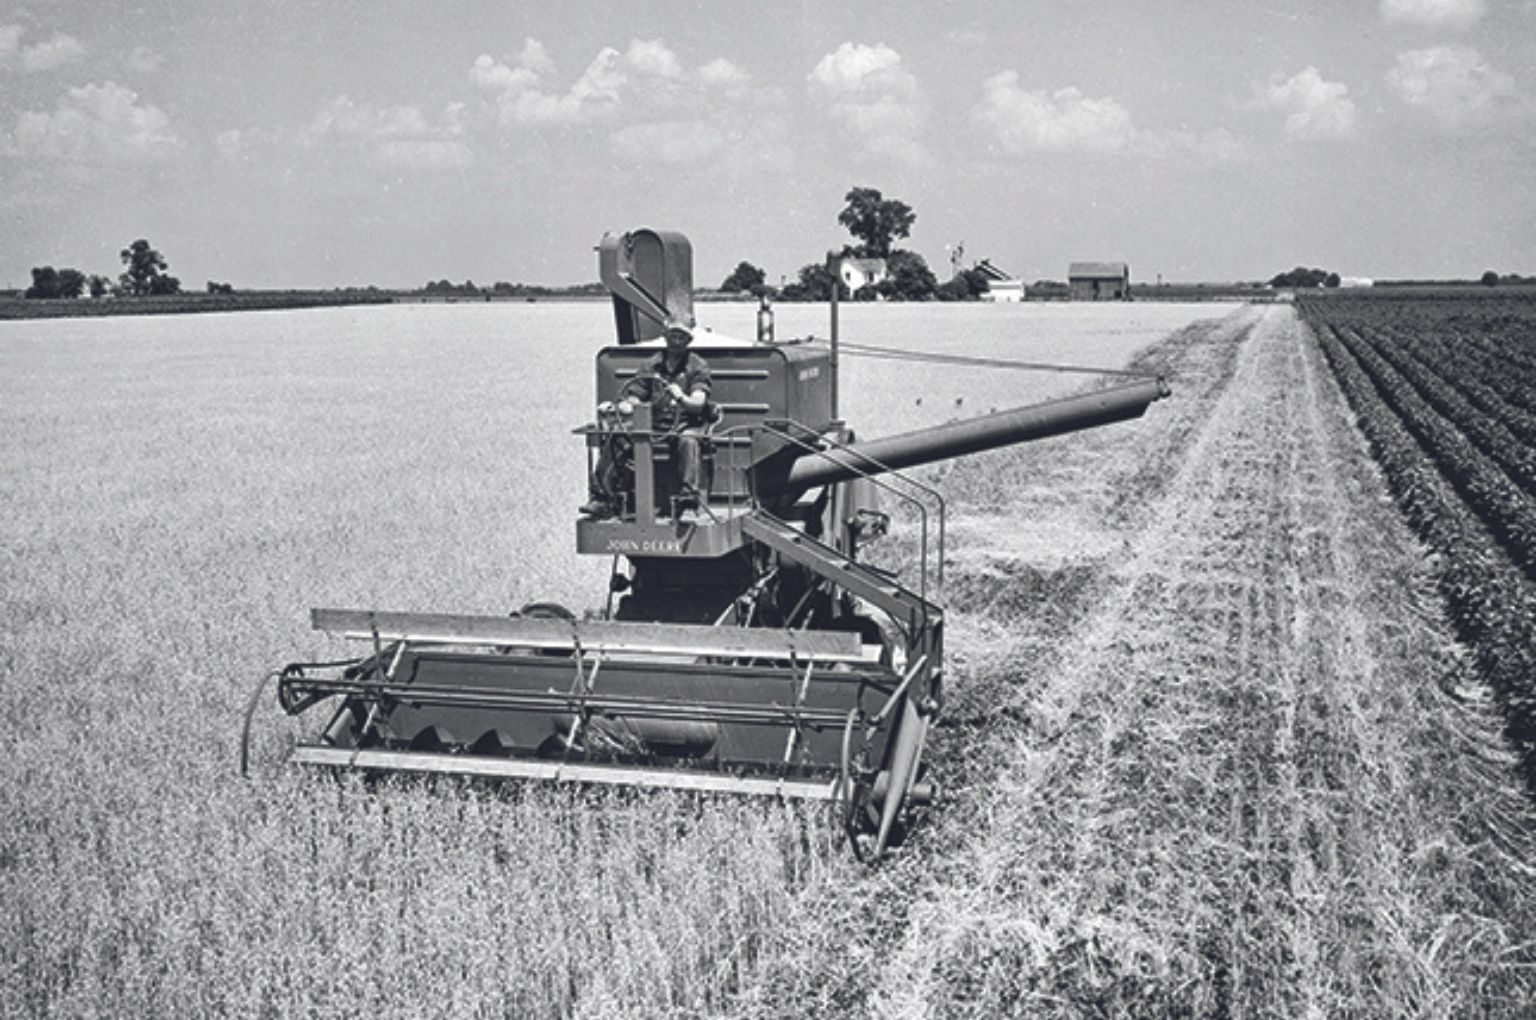 John Deere self-prpelled combine harvester